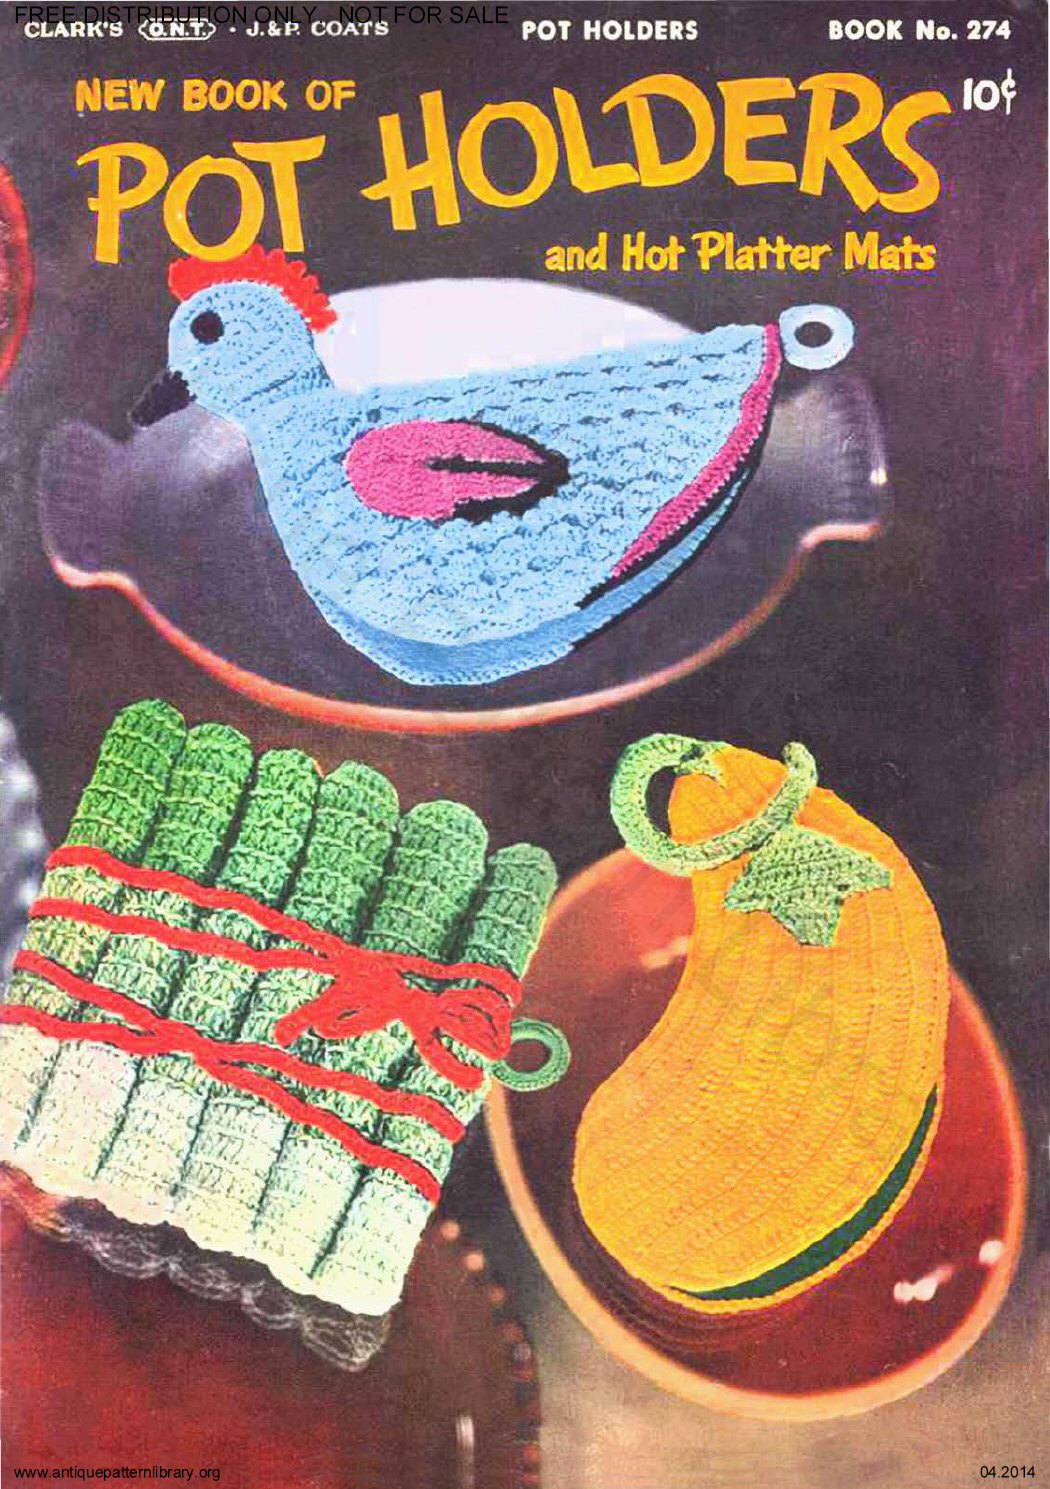 B-JA120 New Book of Pot Holders and Hot Platter Mats, Book No. 274